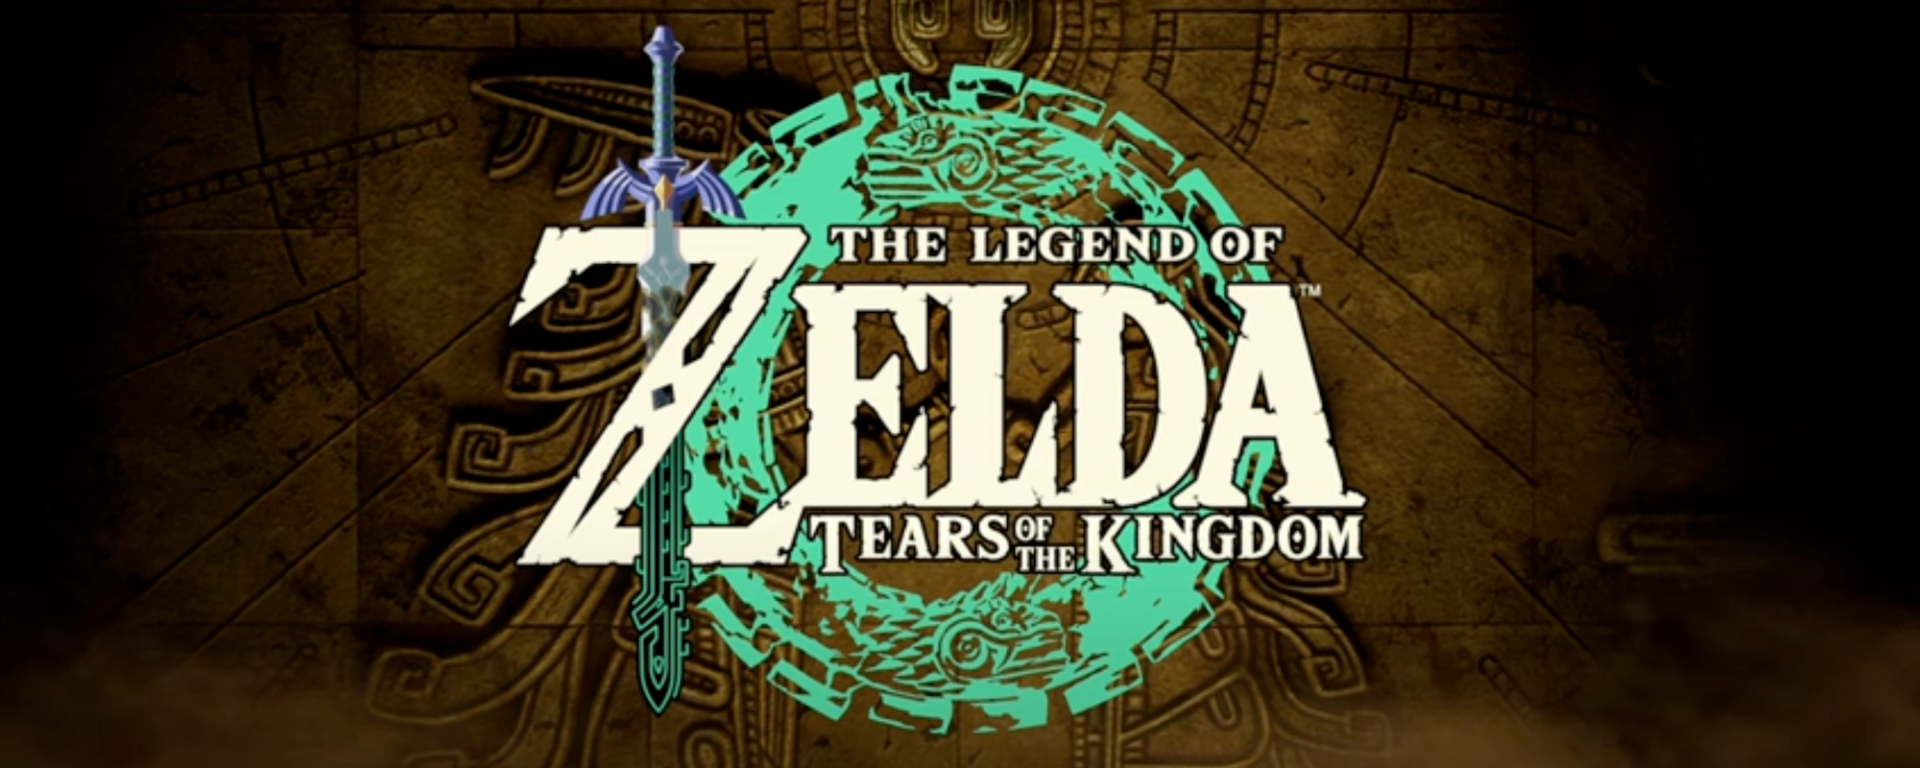 Zelda tears of the kingdom title